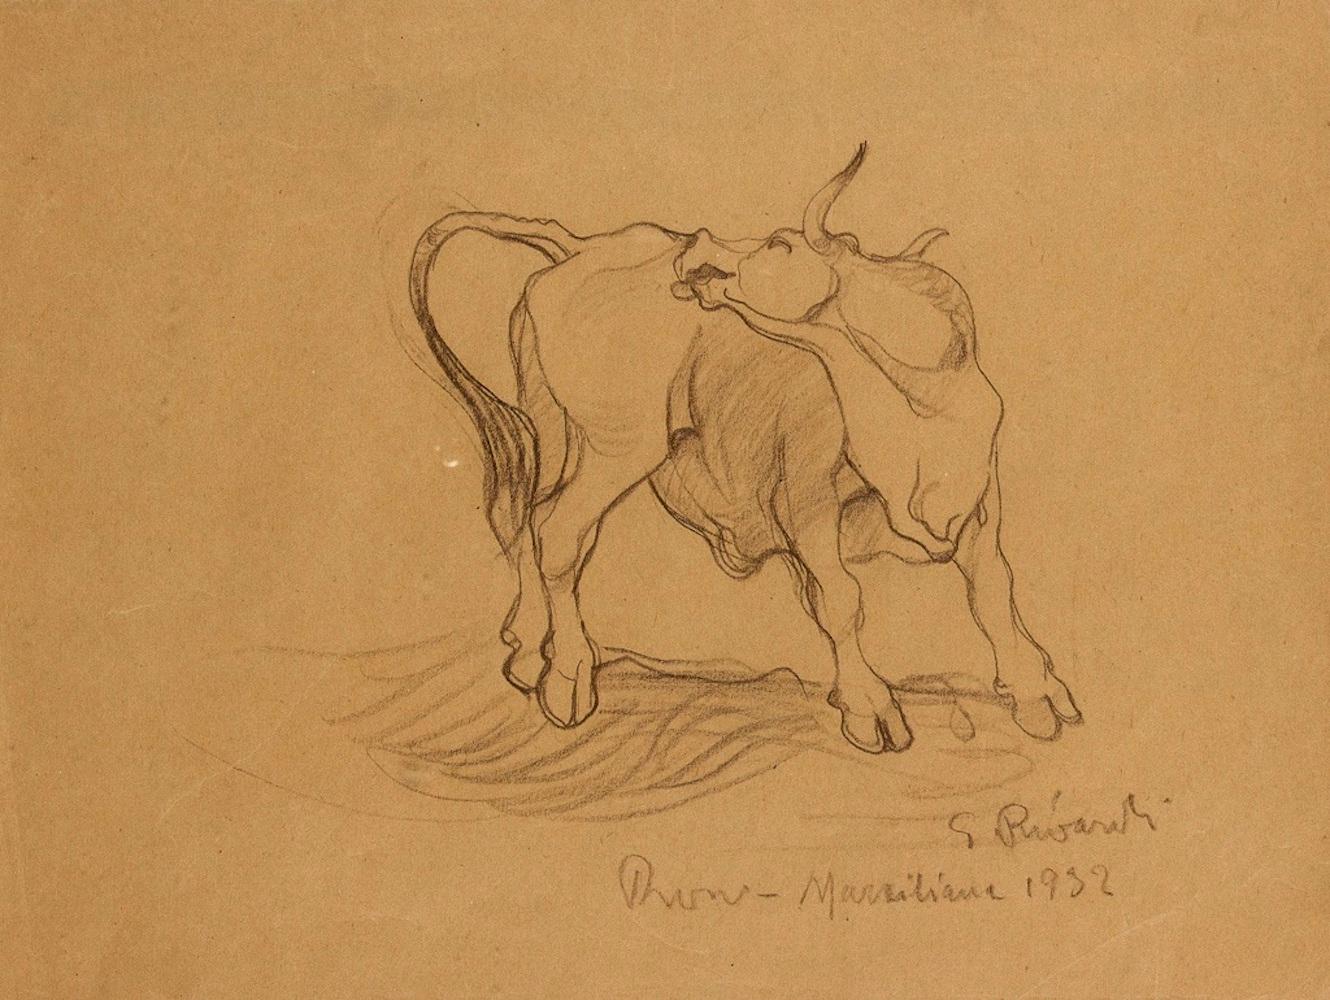 Bull - Original Pencil Drawing by G. Rivaroli . 1932 - Brown Figurative Art by Giuseppe Rivaroli